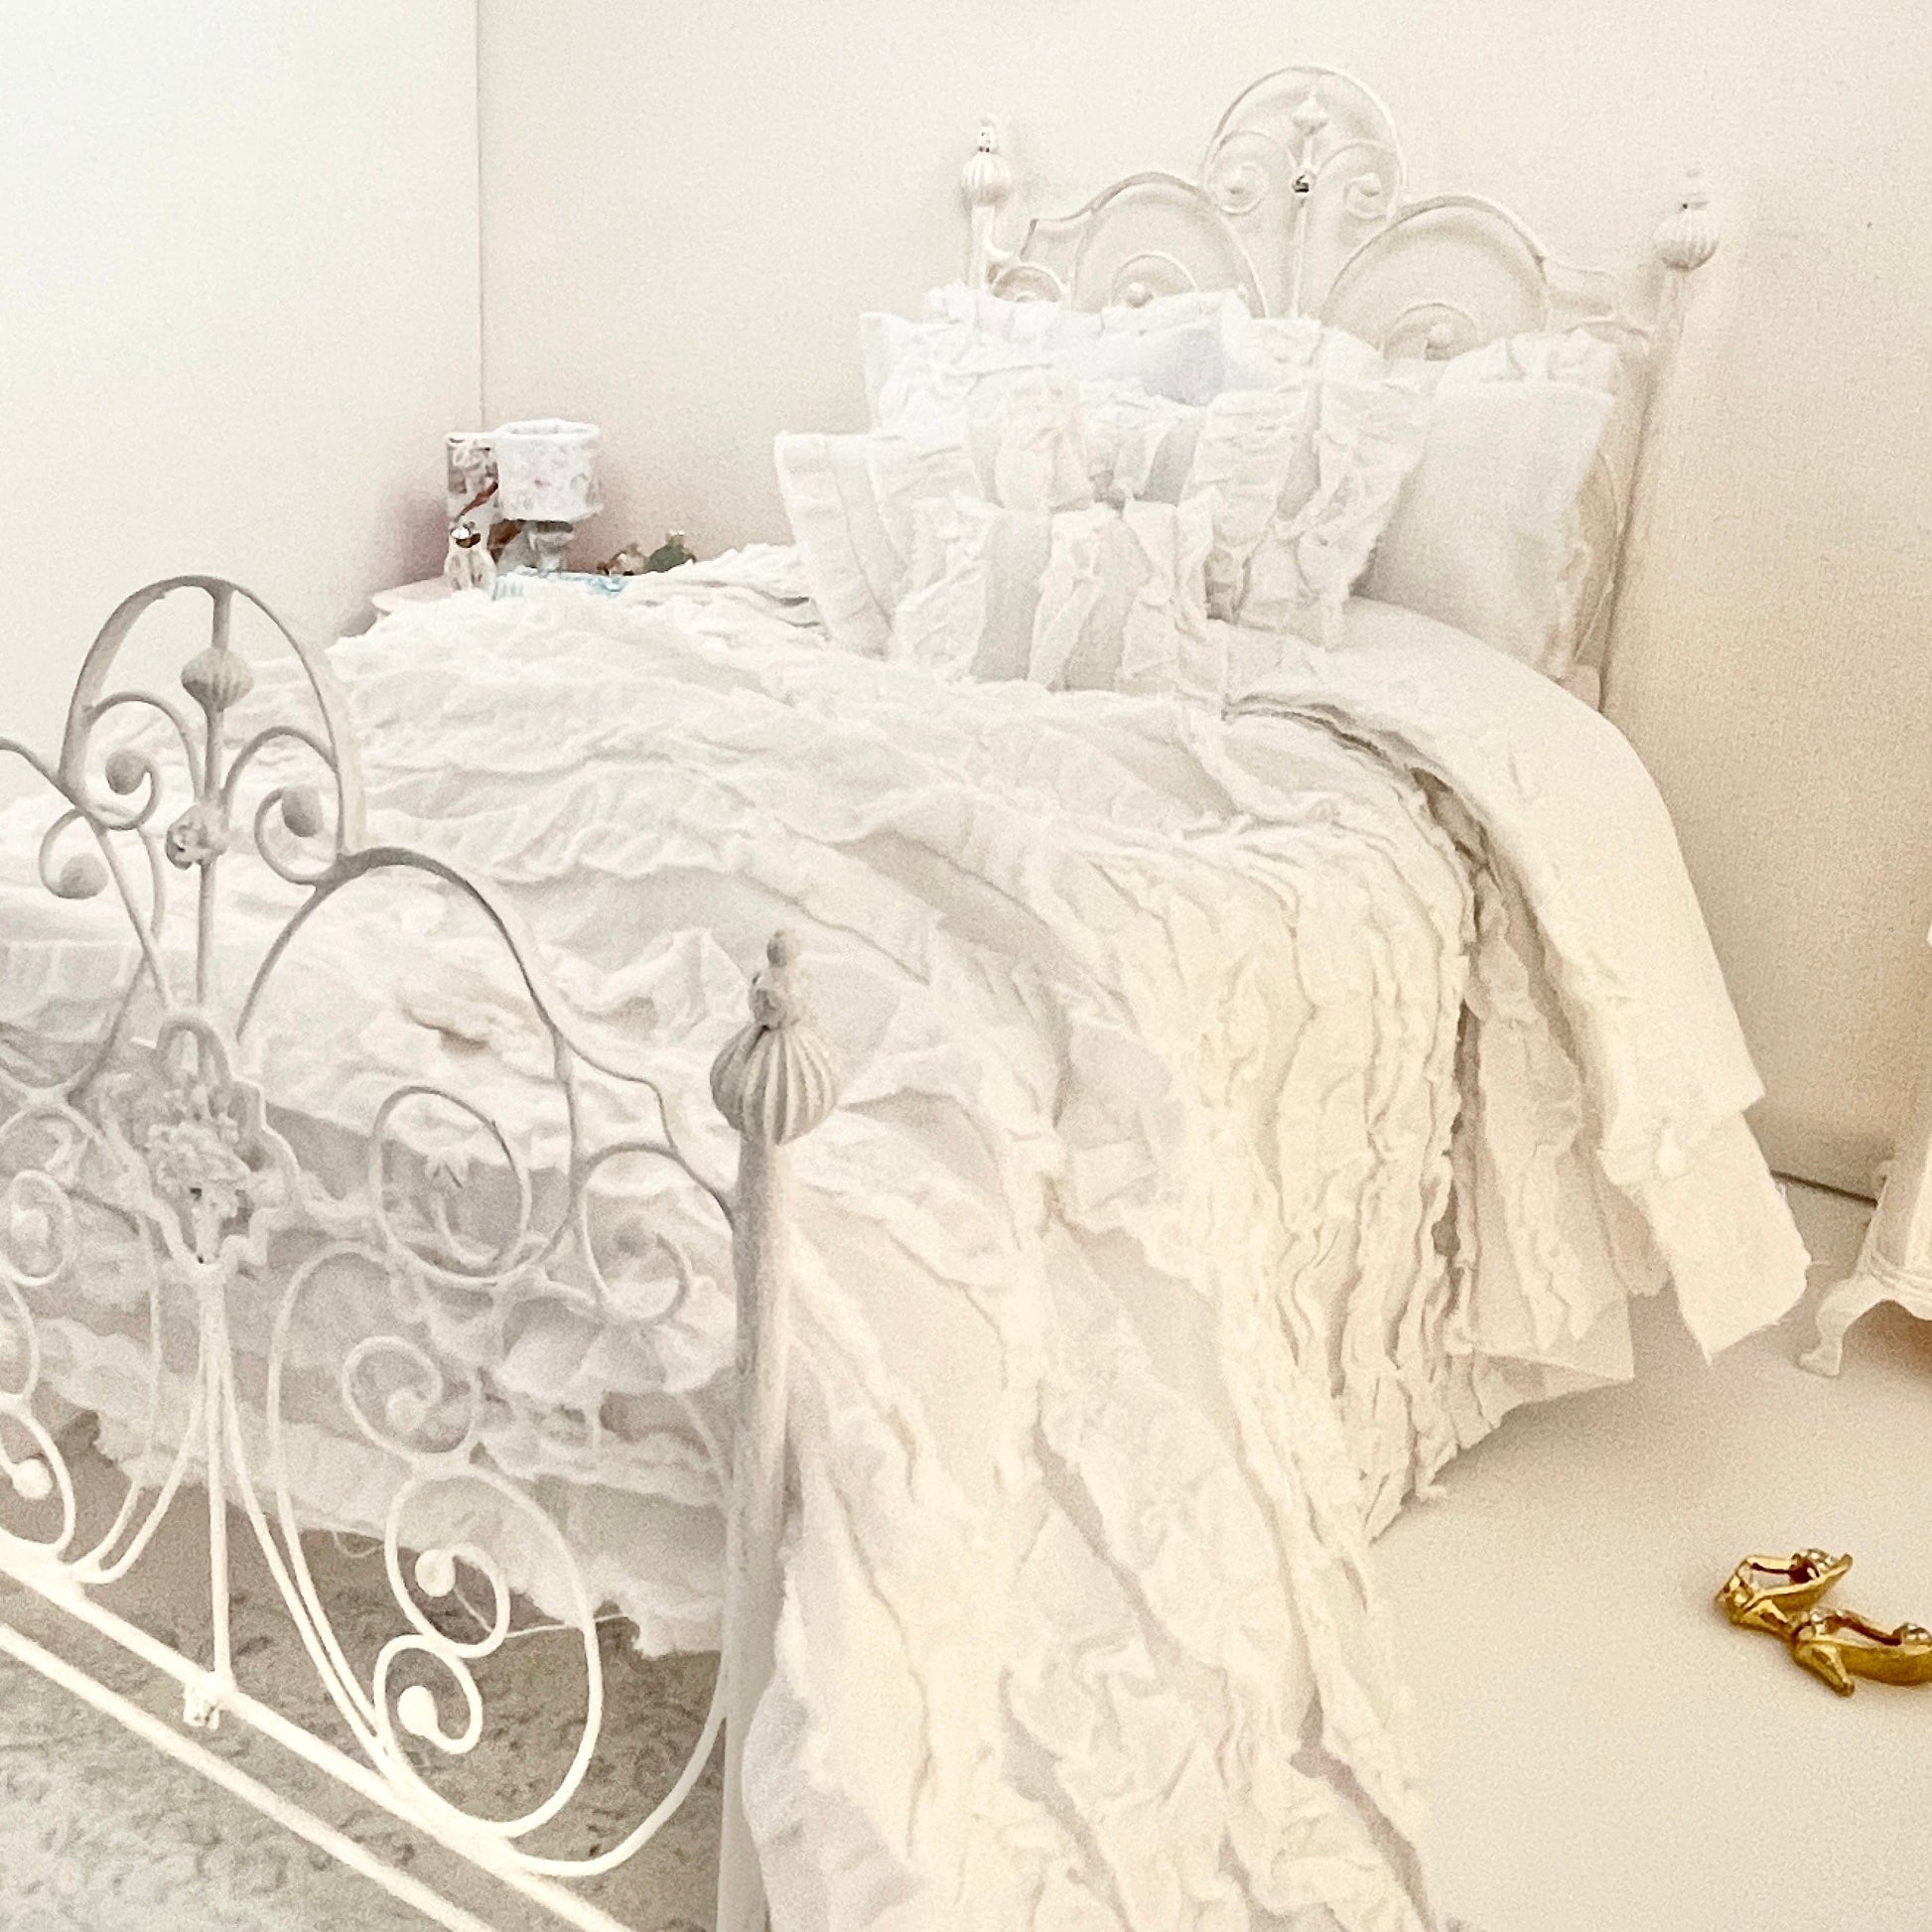 Chantallena fashion doll bedding 1:6 Scale |White Distressed Ruffled Cotton Bedding Set | Julia